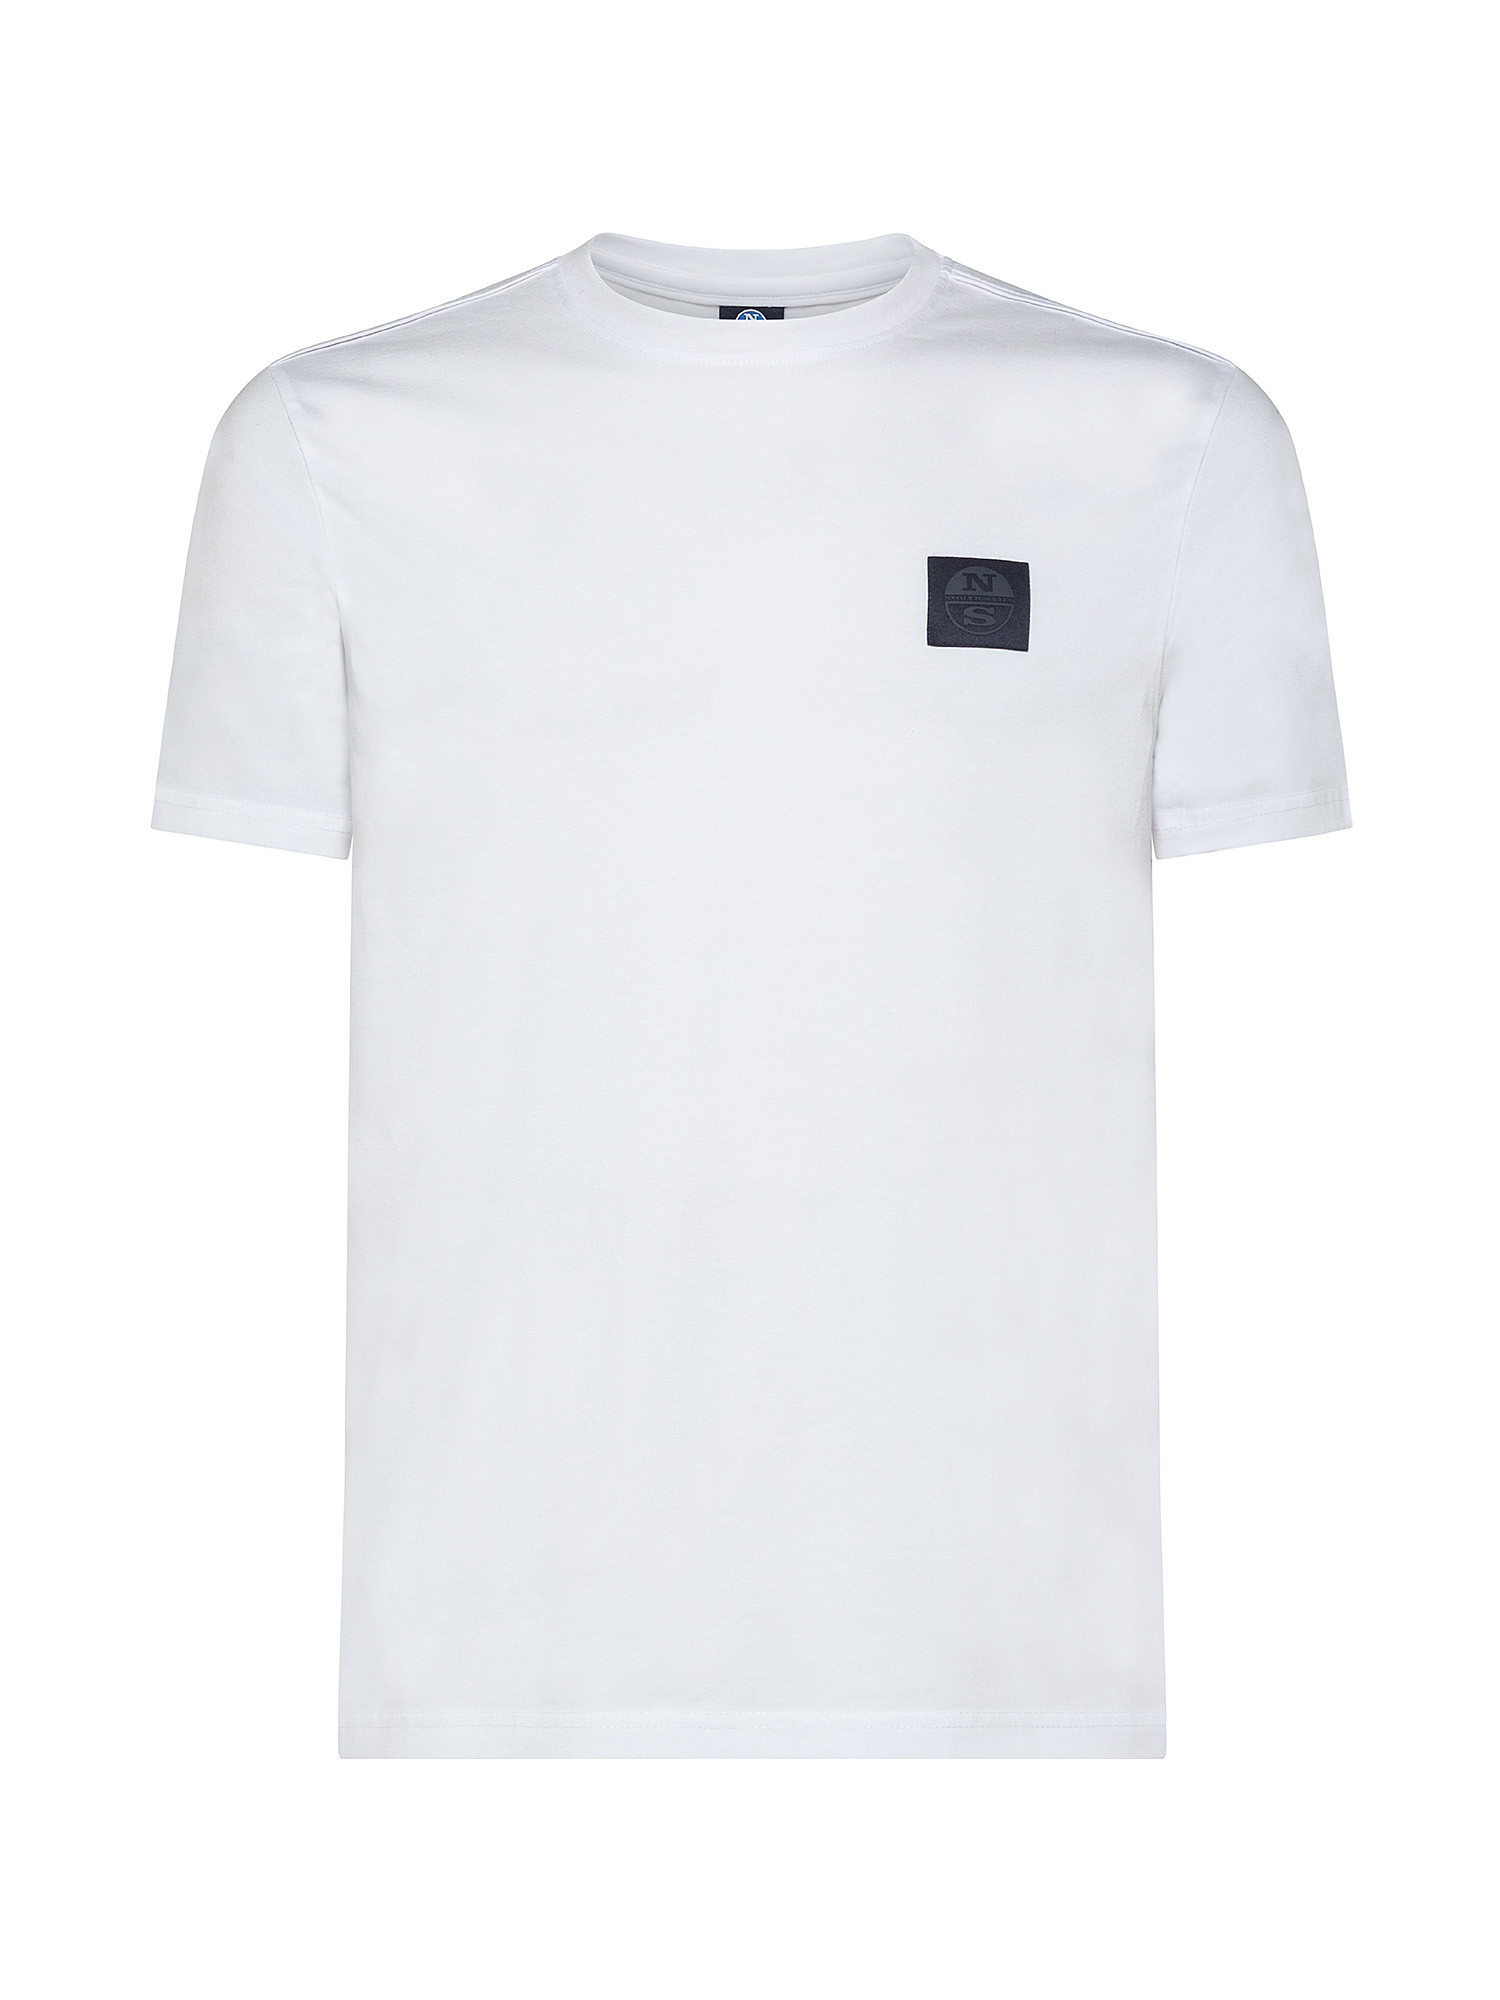 T-shirt manica corta con logo, Bianco, large image number 0